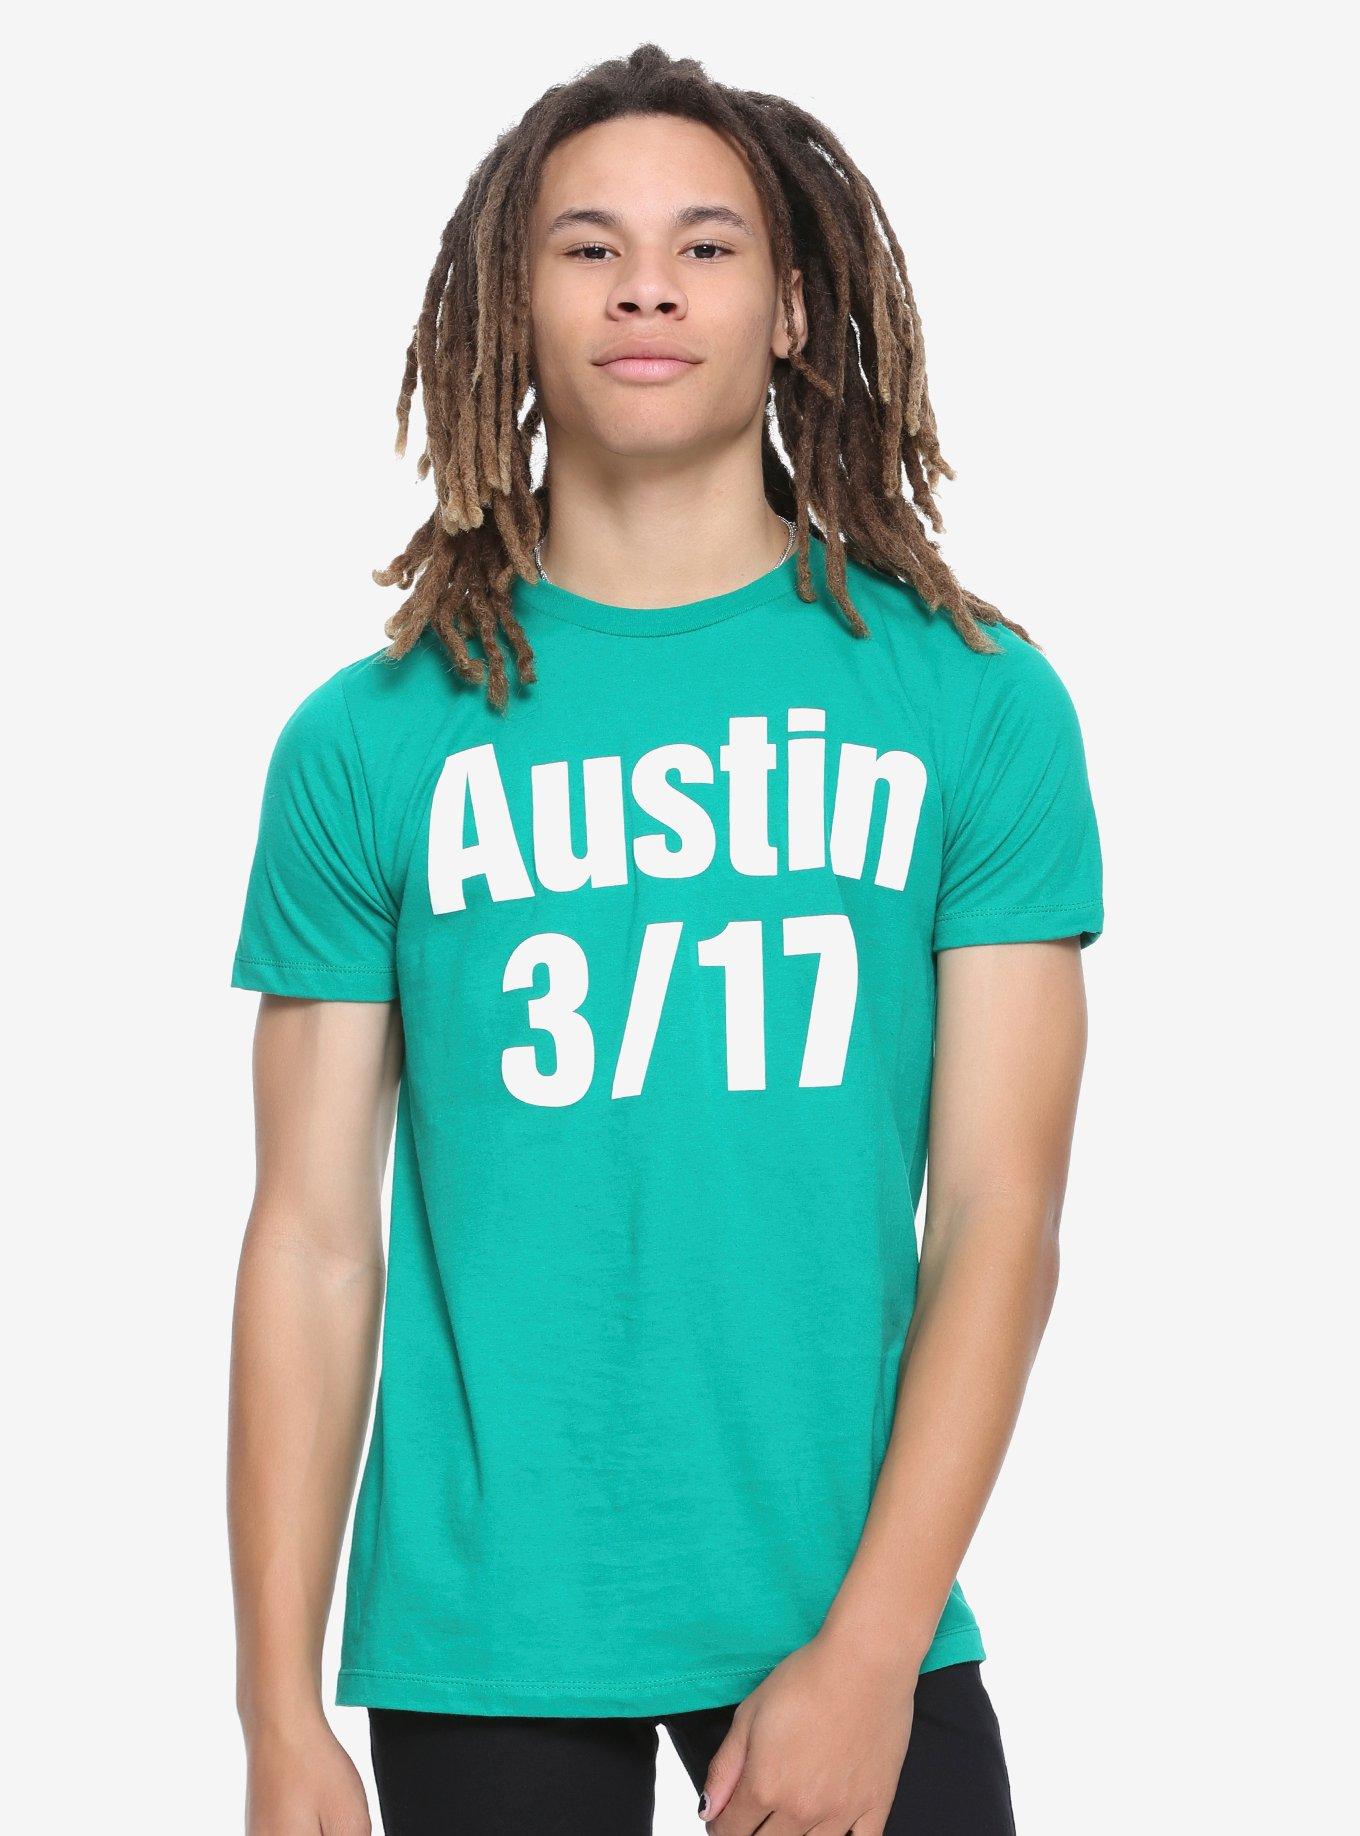 WWE Legends Stone Cold Steve Austin St. Patrick's Day T-Shirt, , alternate